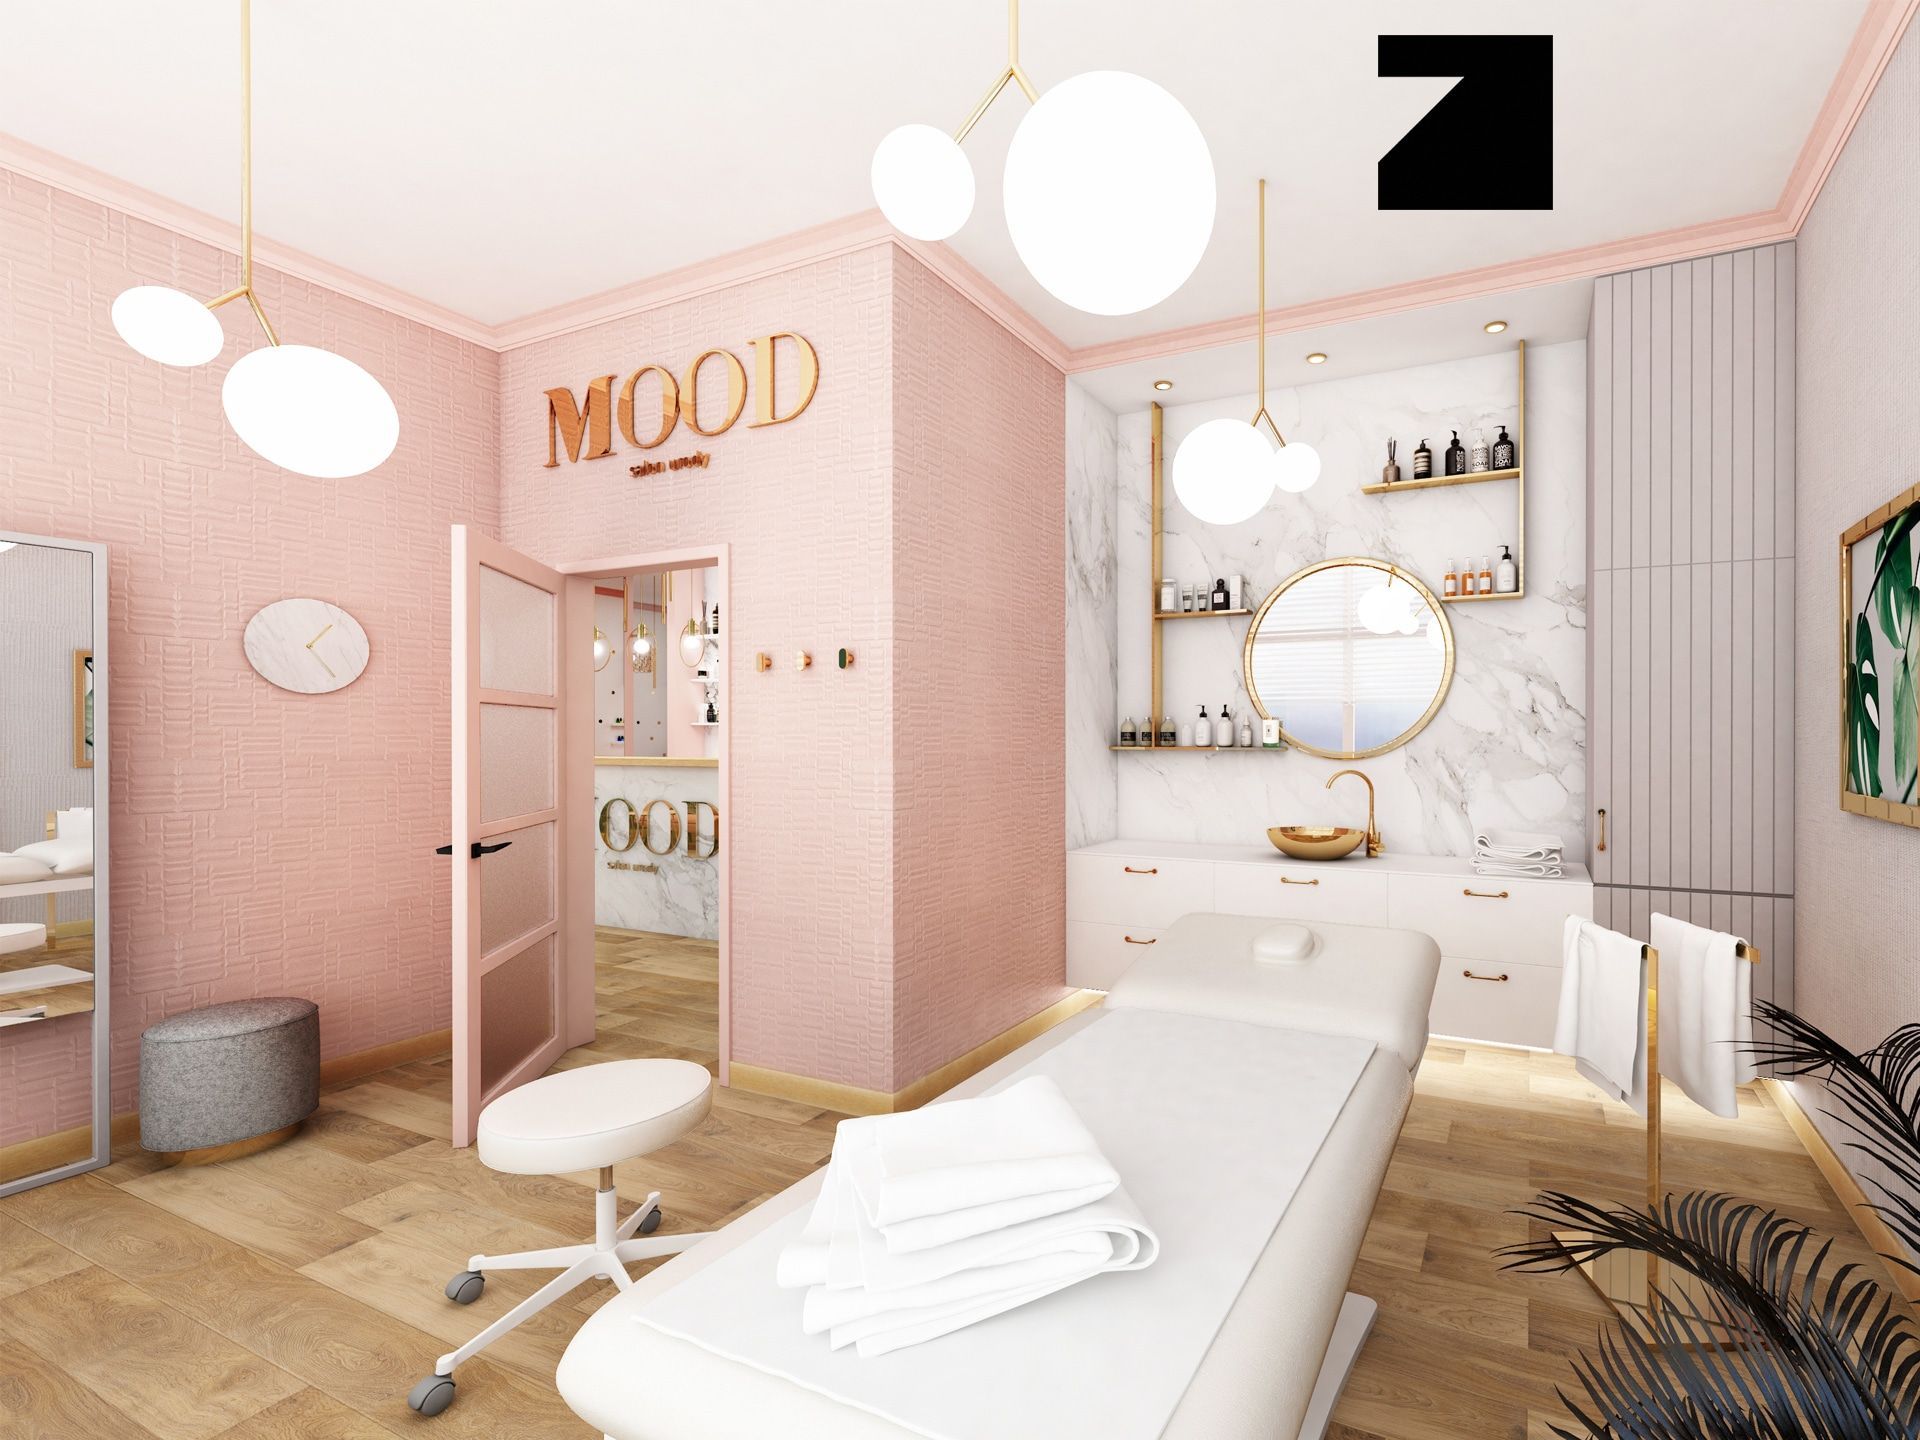 BEAUTY SALON MOOD - Lesinska Concept - Premium Design Studio -   19 beauty Design salon ideas